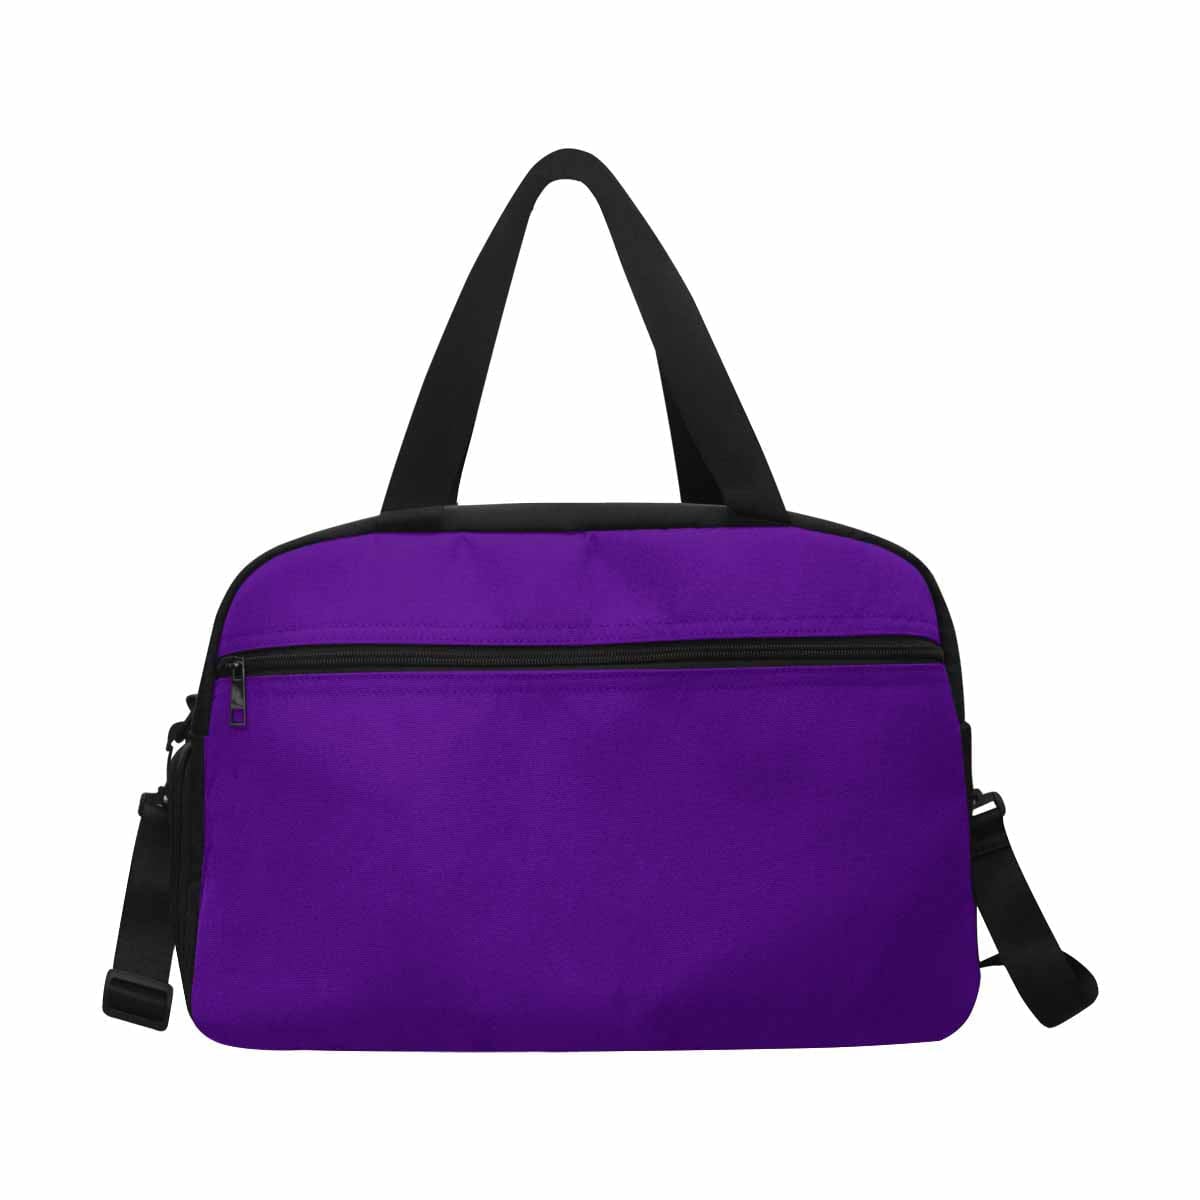 Indigo Purple Tote And Crossbody Travel Bag - Bags | Travel Bags | Crossbody